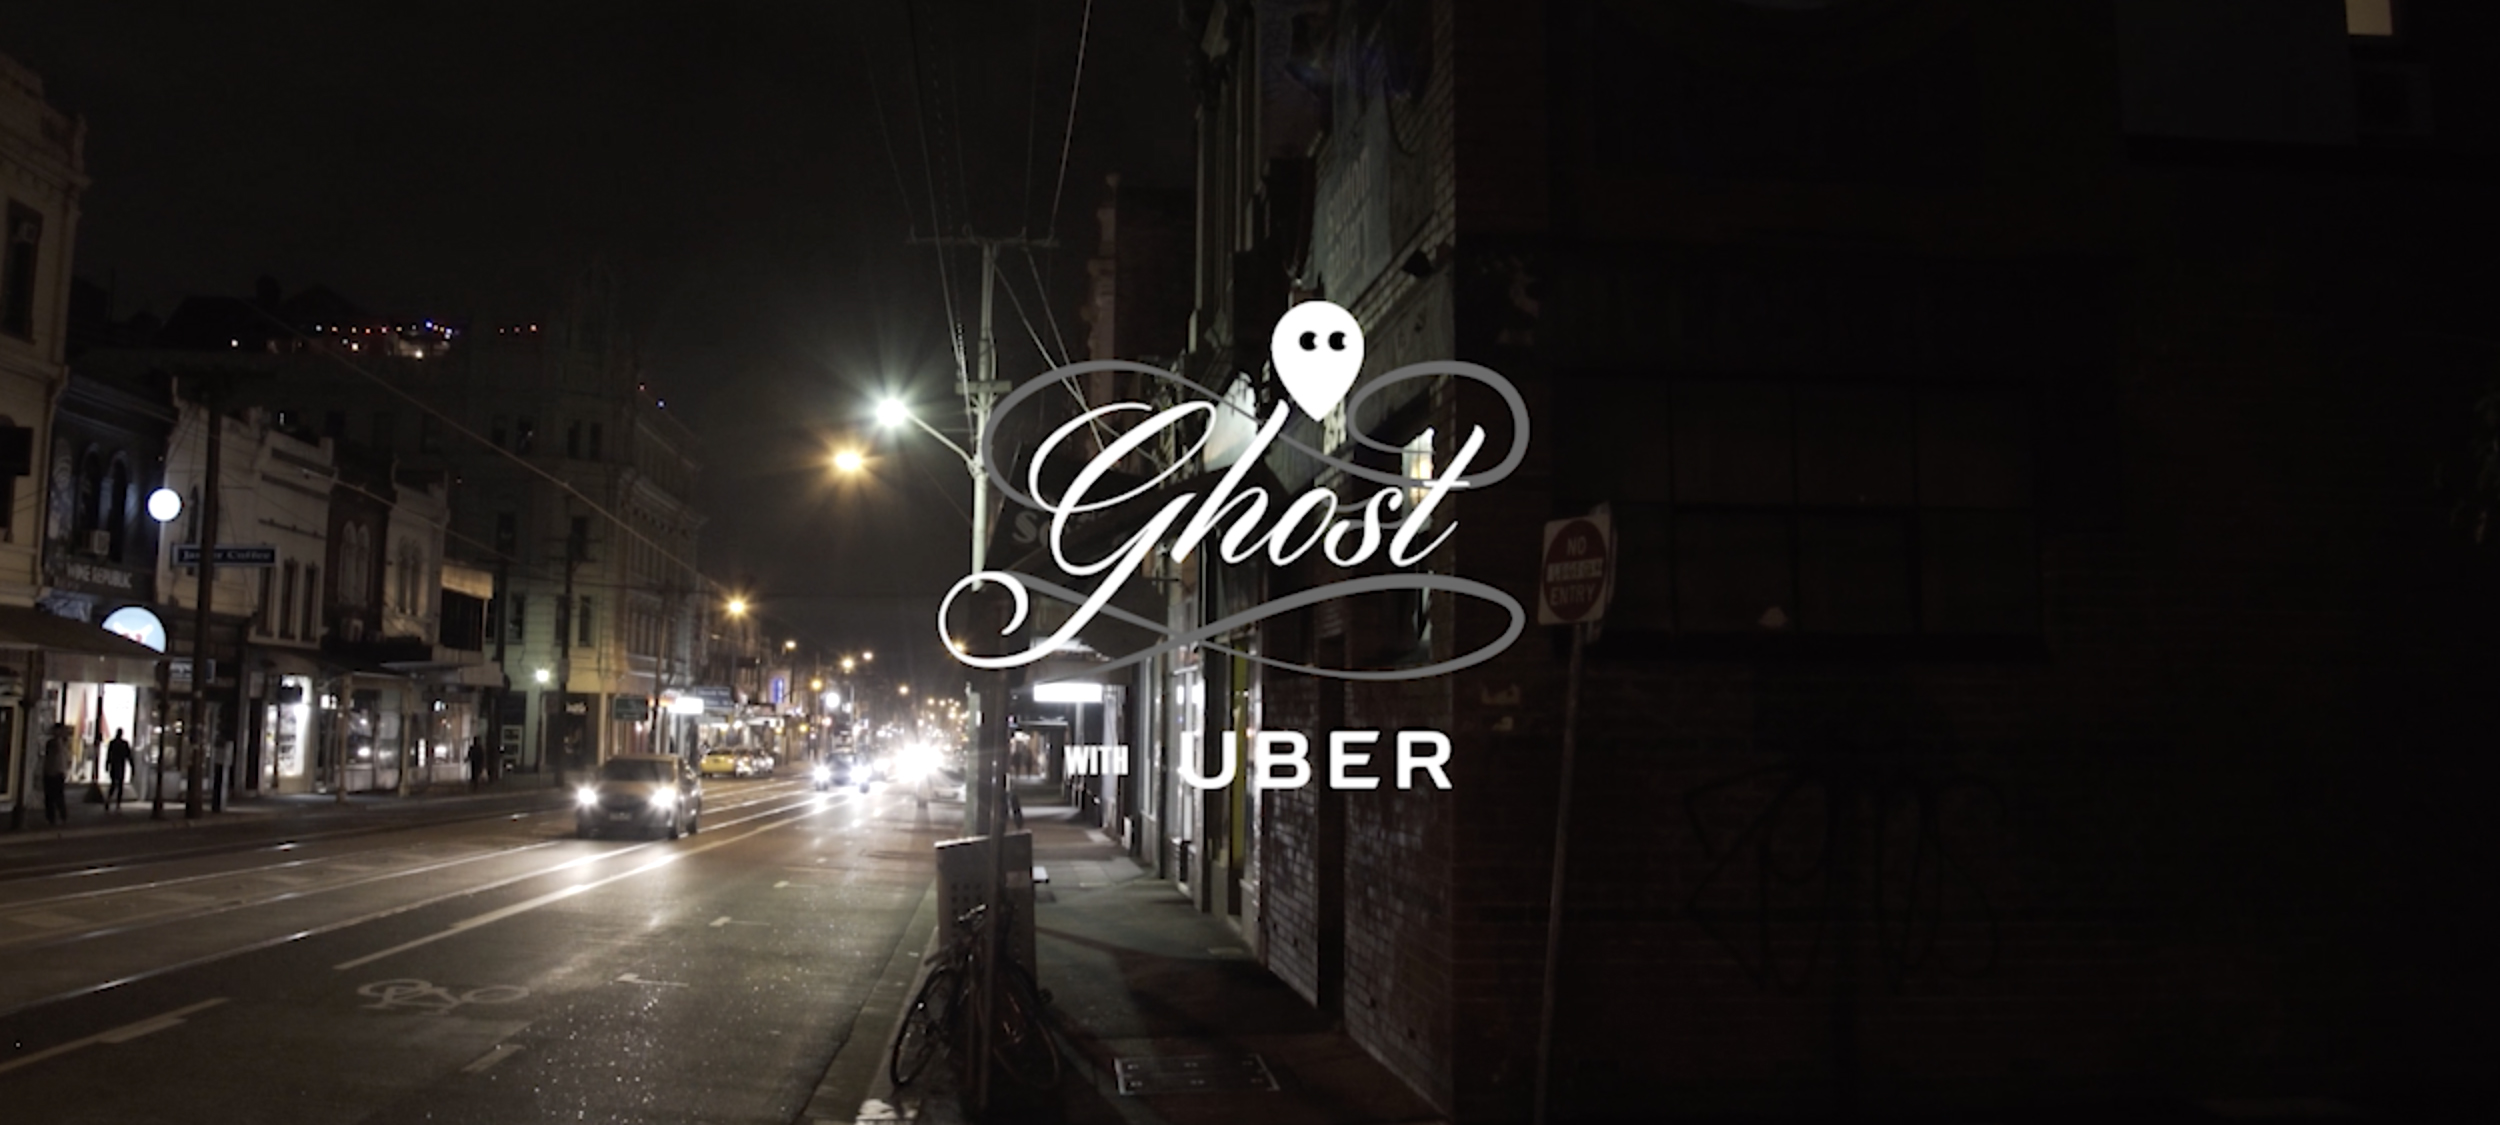 Uber Ghost Hero